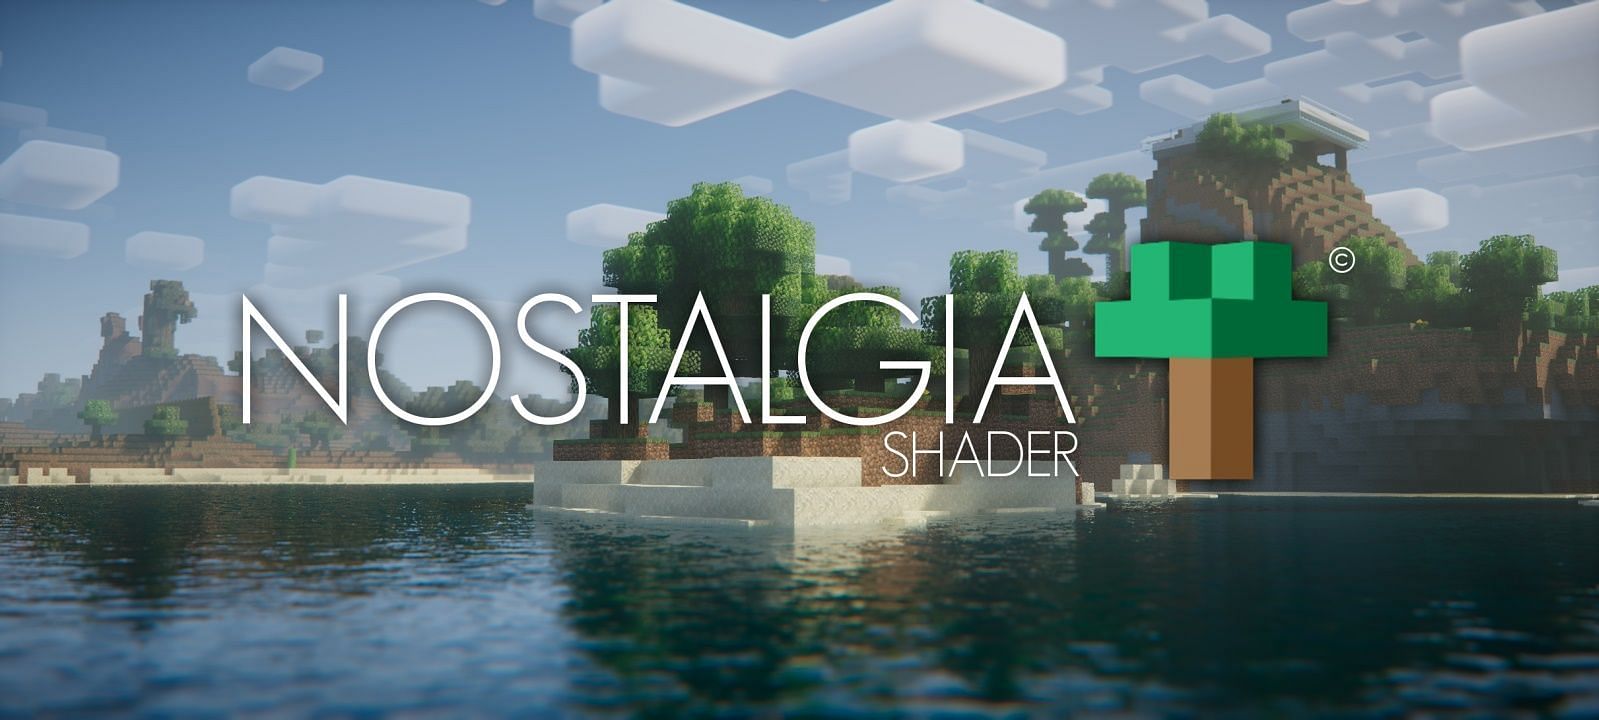 The Nostalgia shader (Image via curseforge)